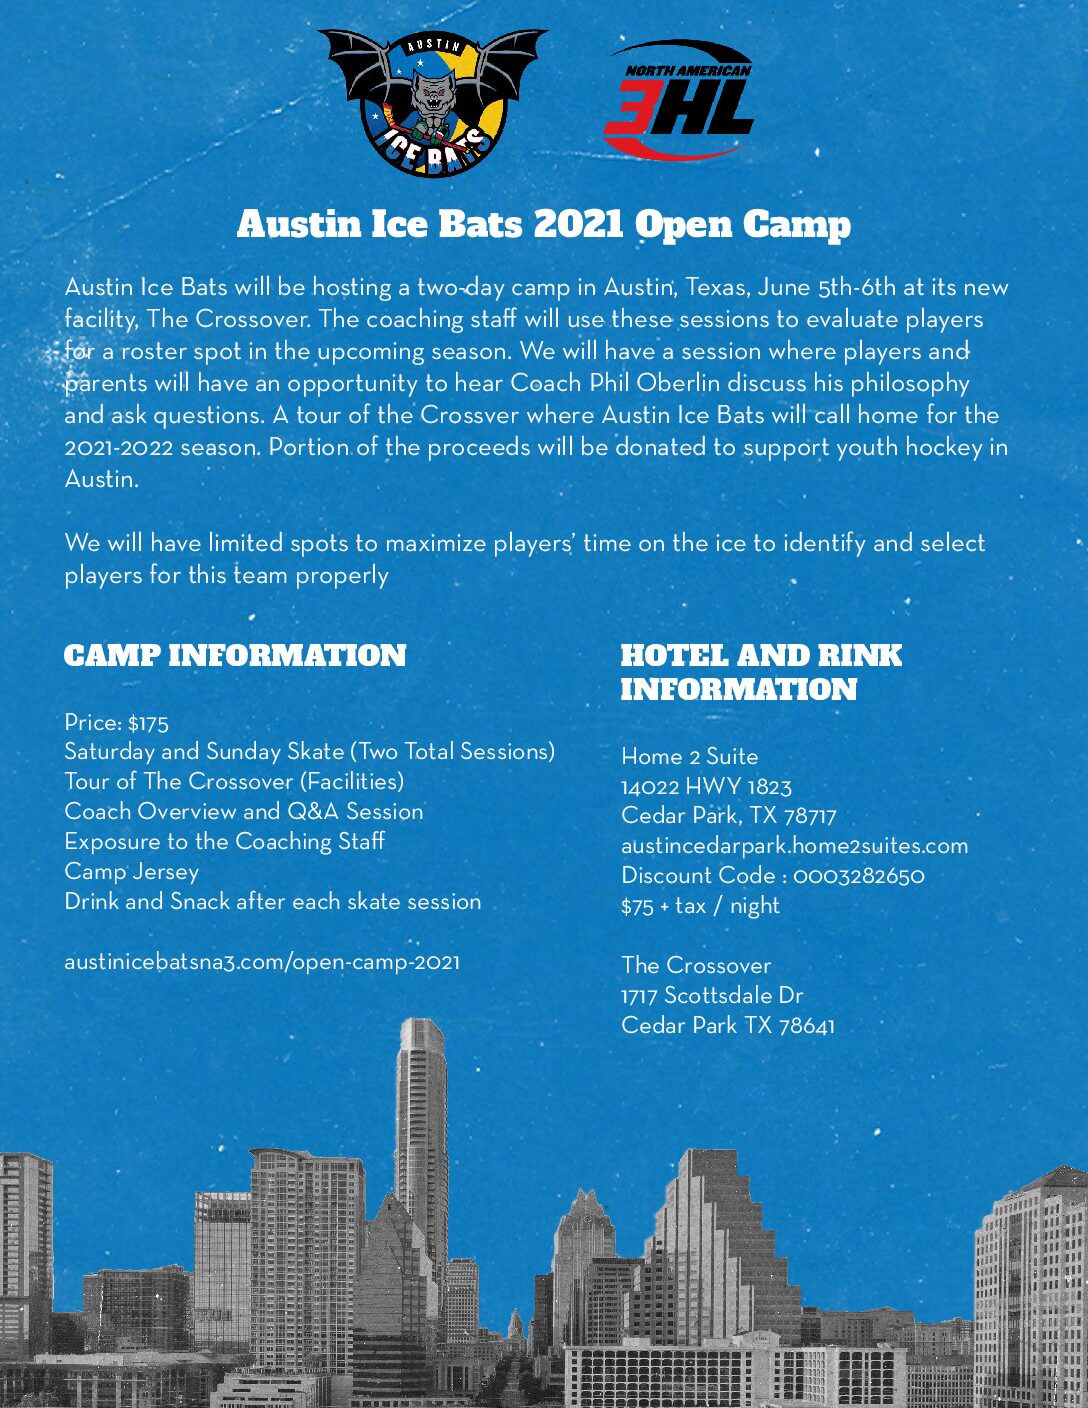 Austin Ice Bats Open Camp Open for Registration